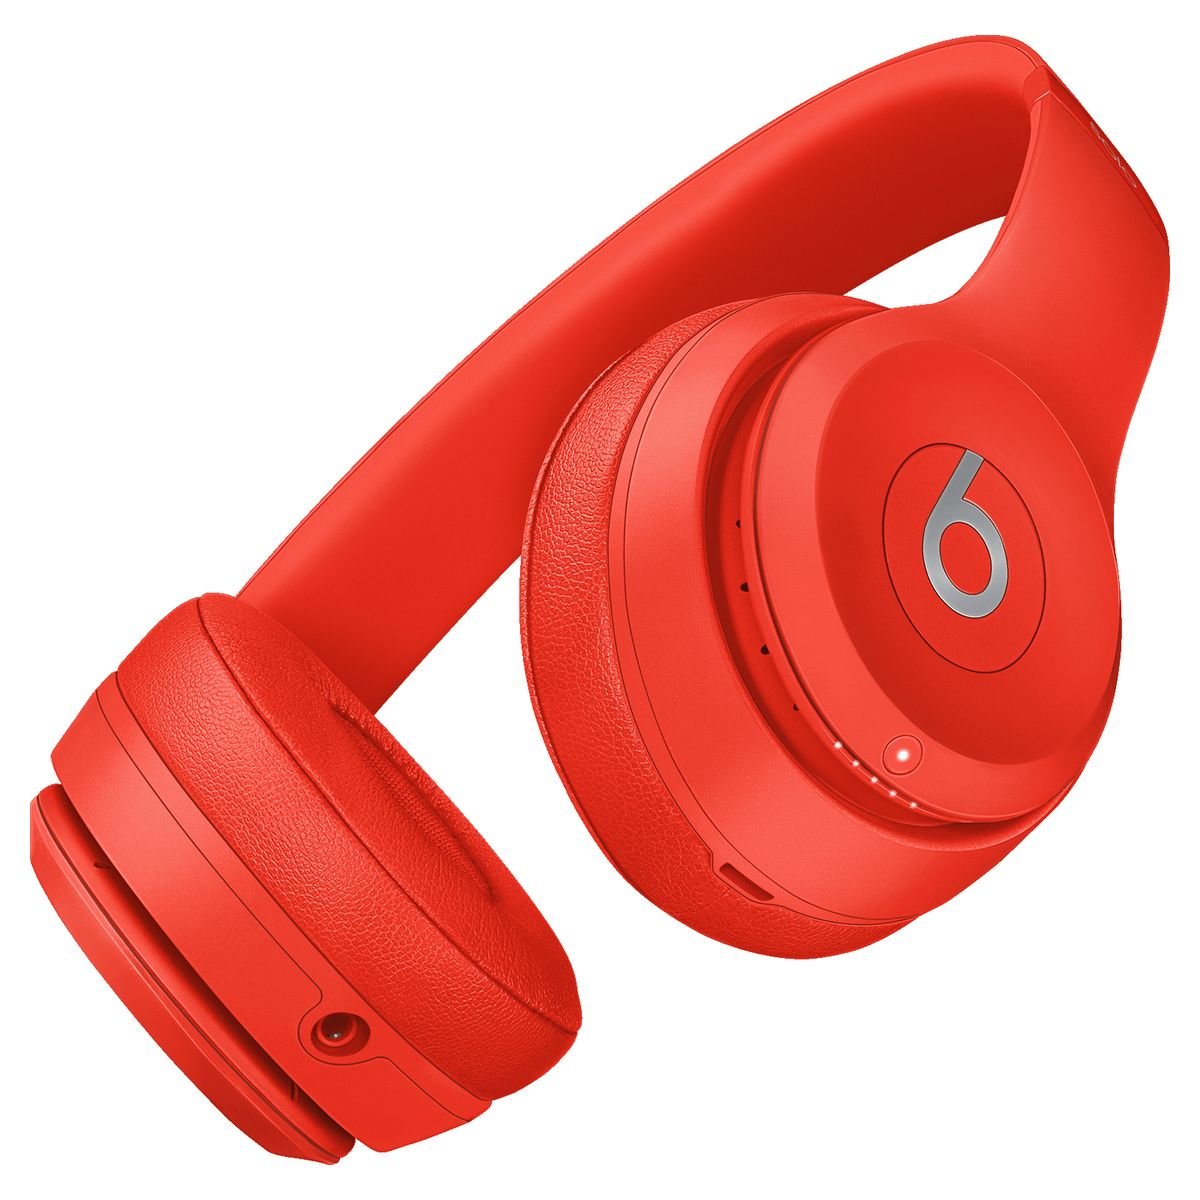 red beats bluetooth headphones